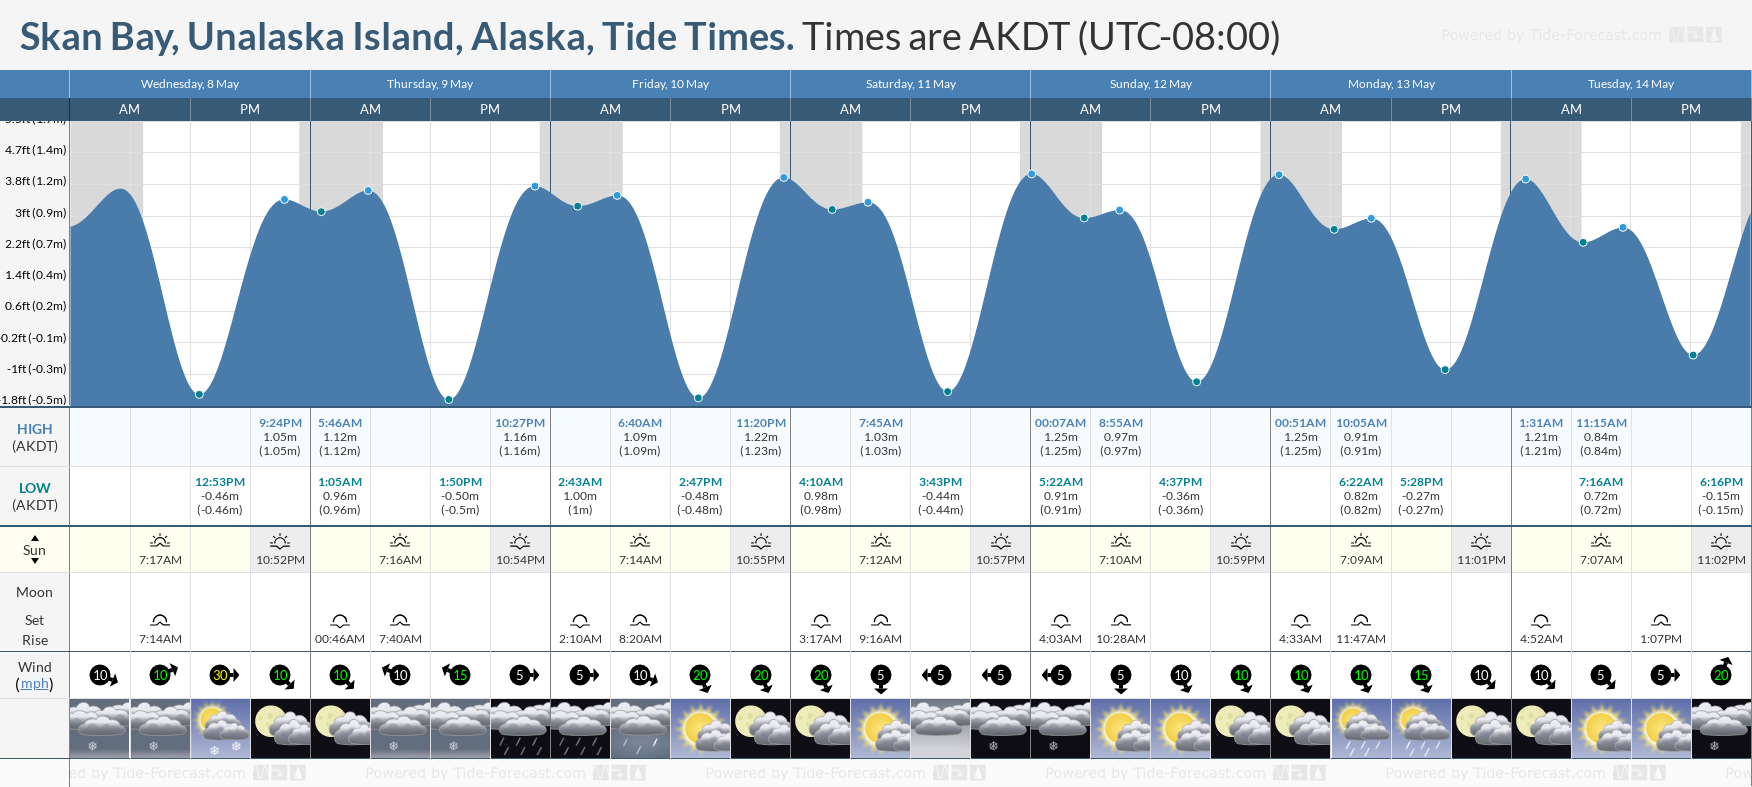 Skan Bay, Unalaska Island, Alaska Tide Chart including high and low tide tide times for the next 7 days